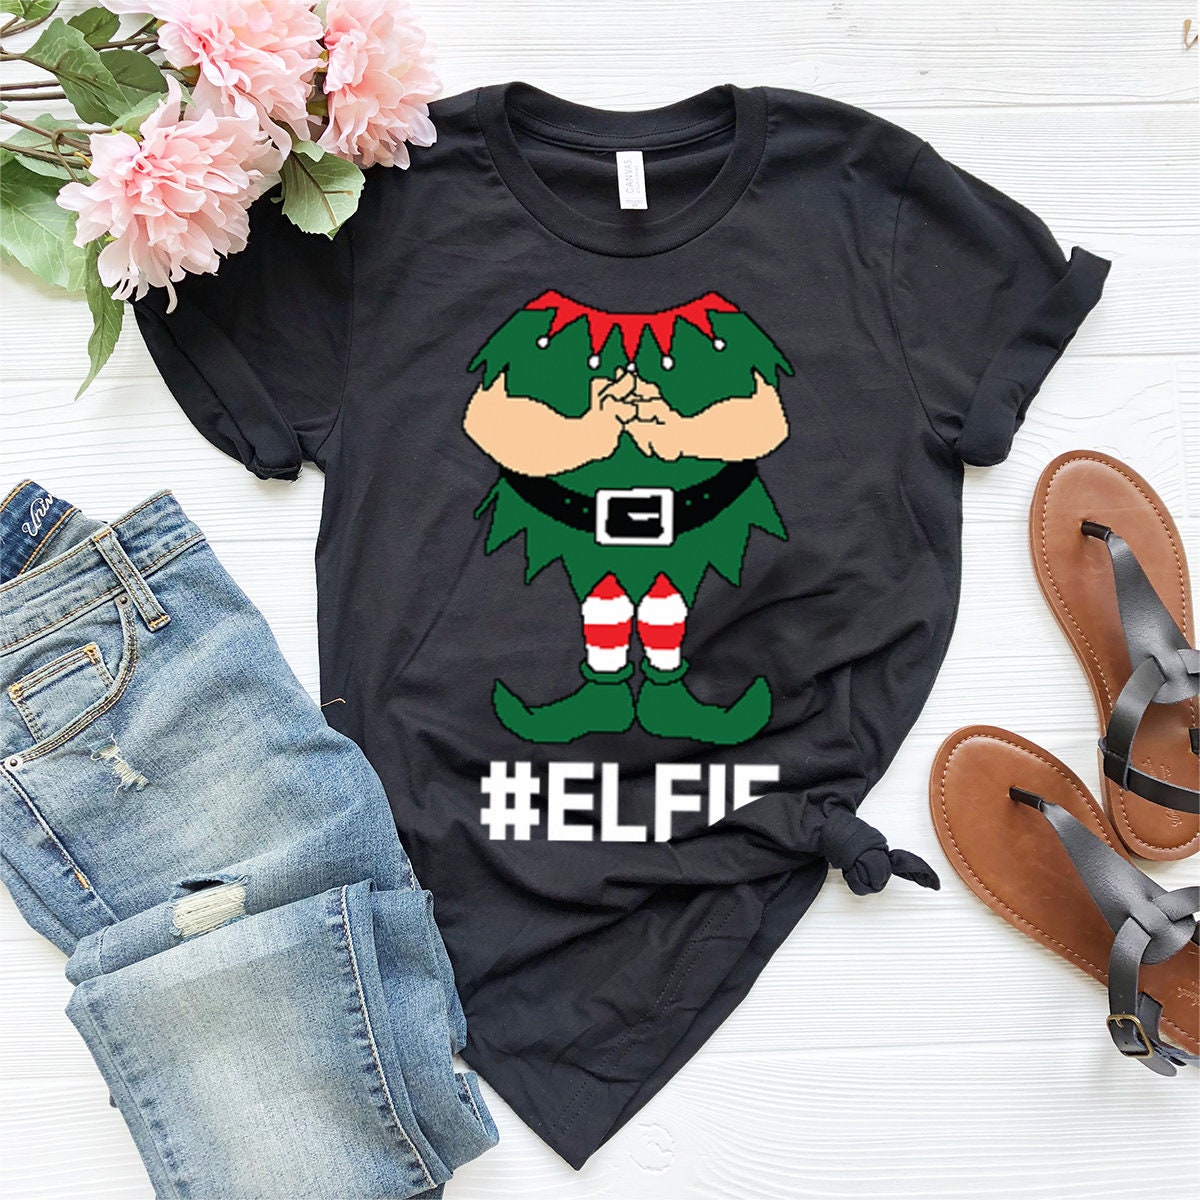 Christmas Shirt, Elf Shirt, Funny Christmas Shirts, Elfie Xmas Shirt, Christmas Party Shirt, Christmas 2022 Gift, Santa Claus Shirt - Fastdeliverytees.com